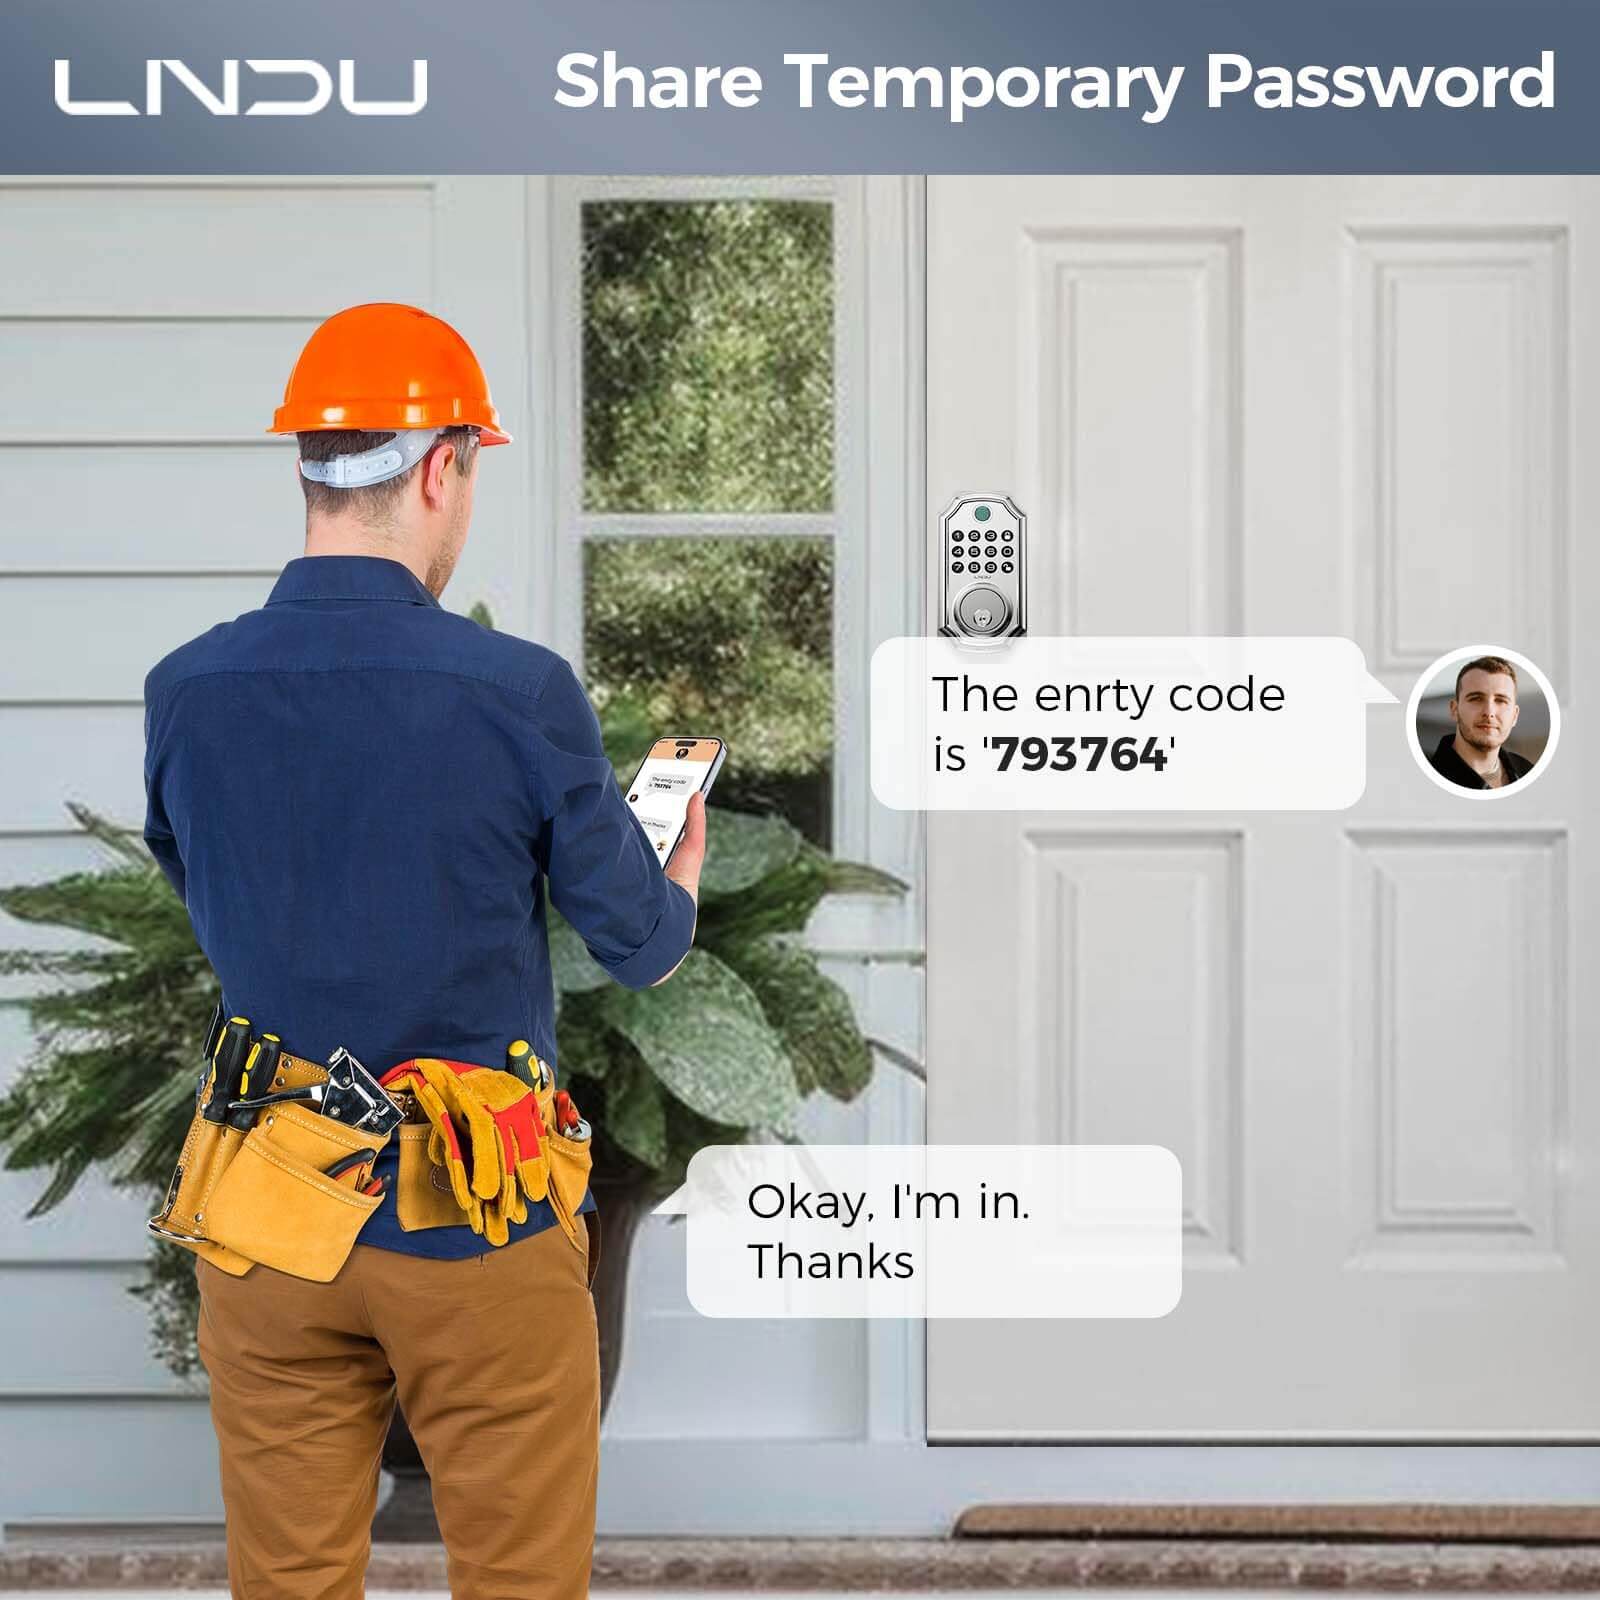 LNDU D280 Keyless Entry Door Lock with App Control Fingerprint Unlock